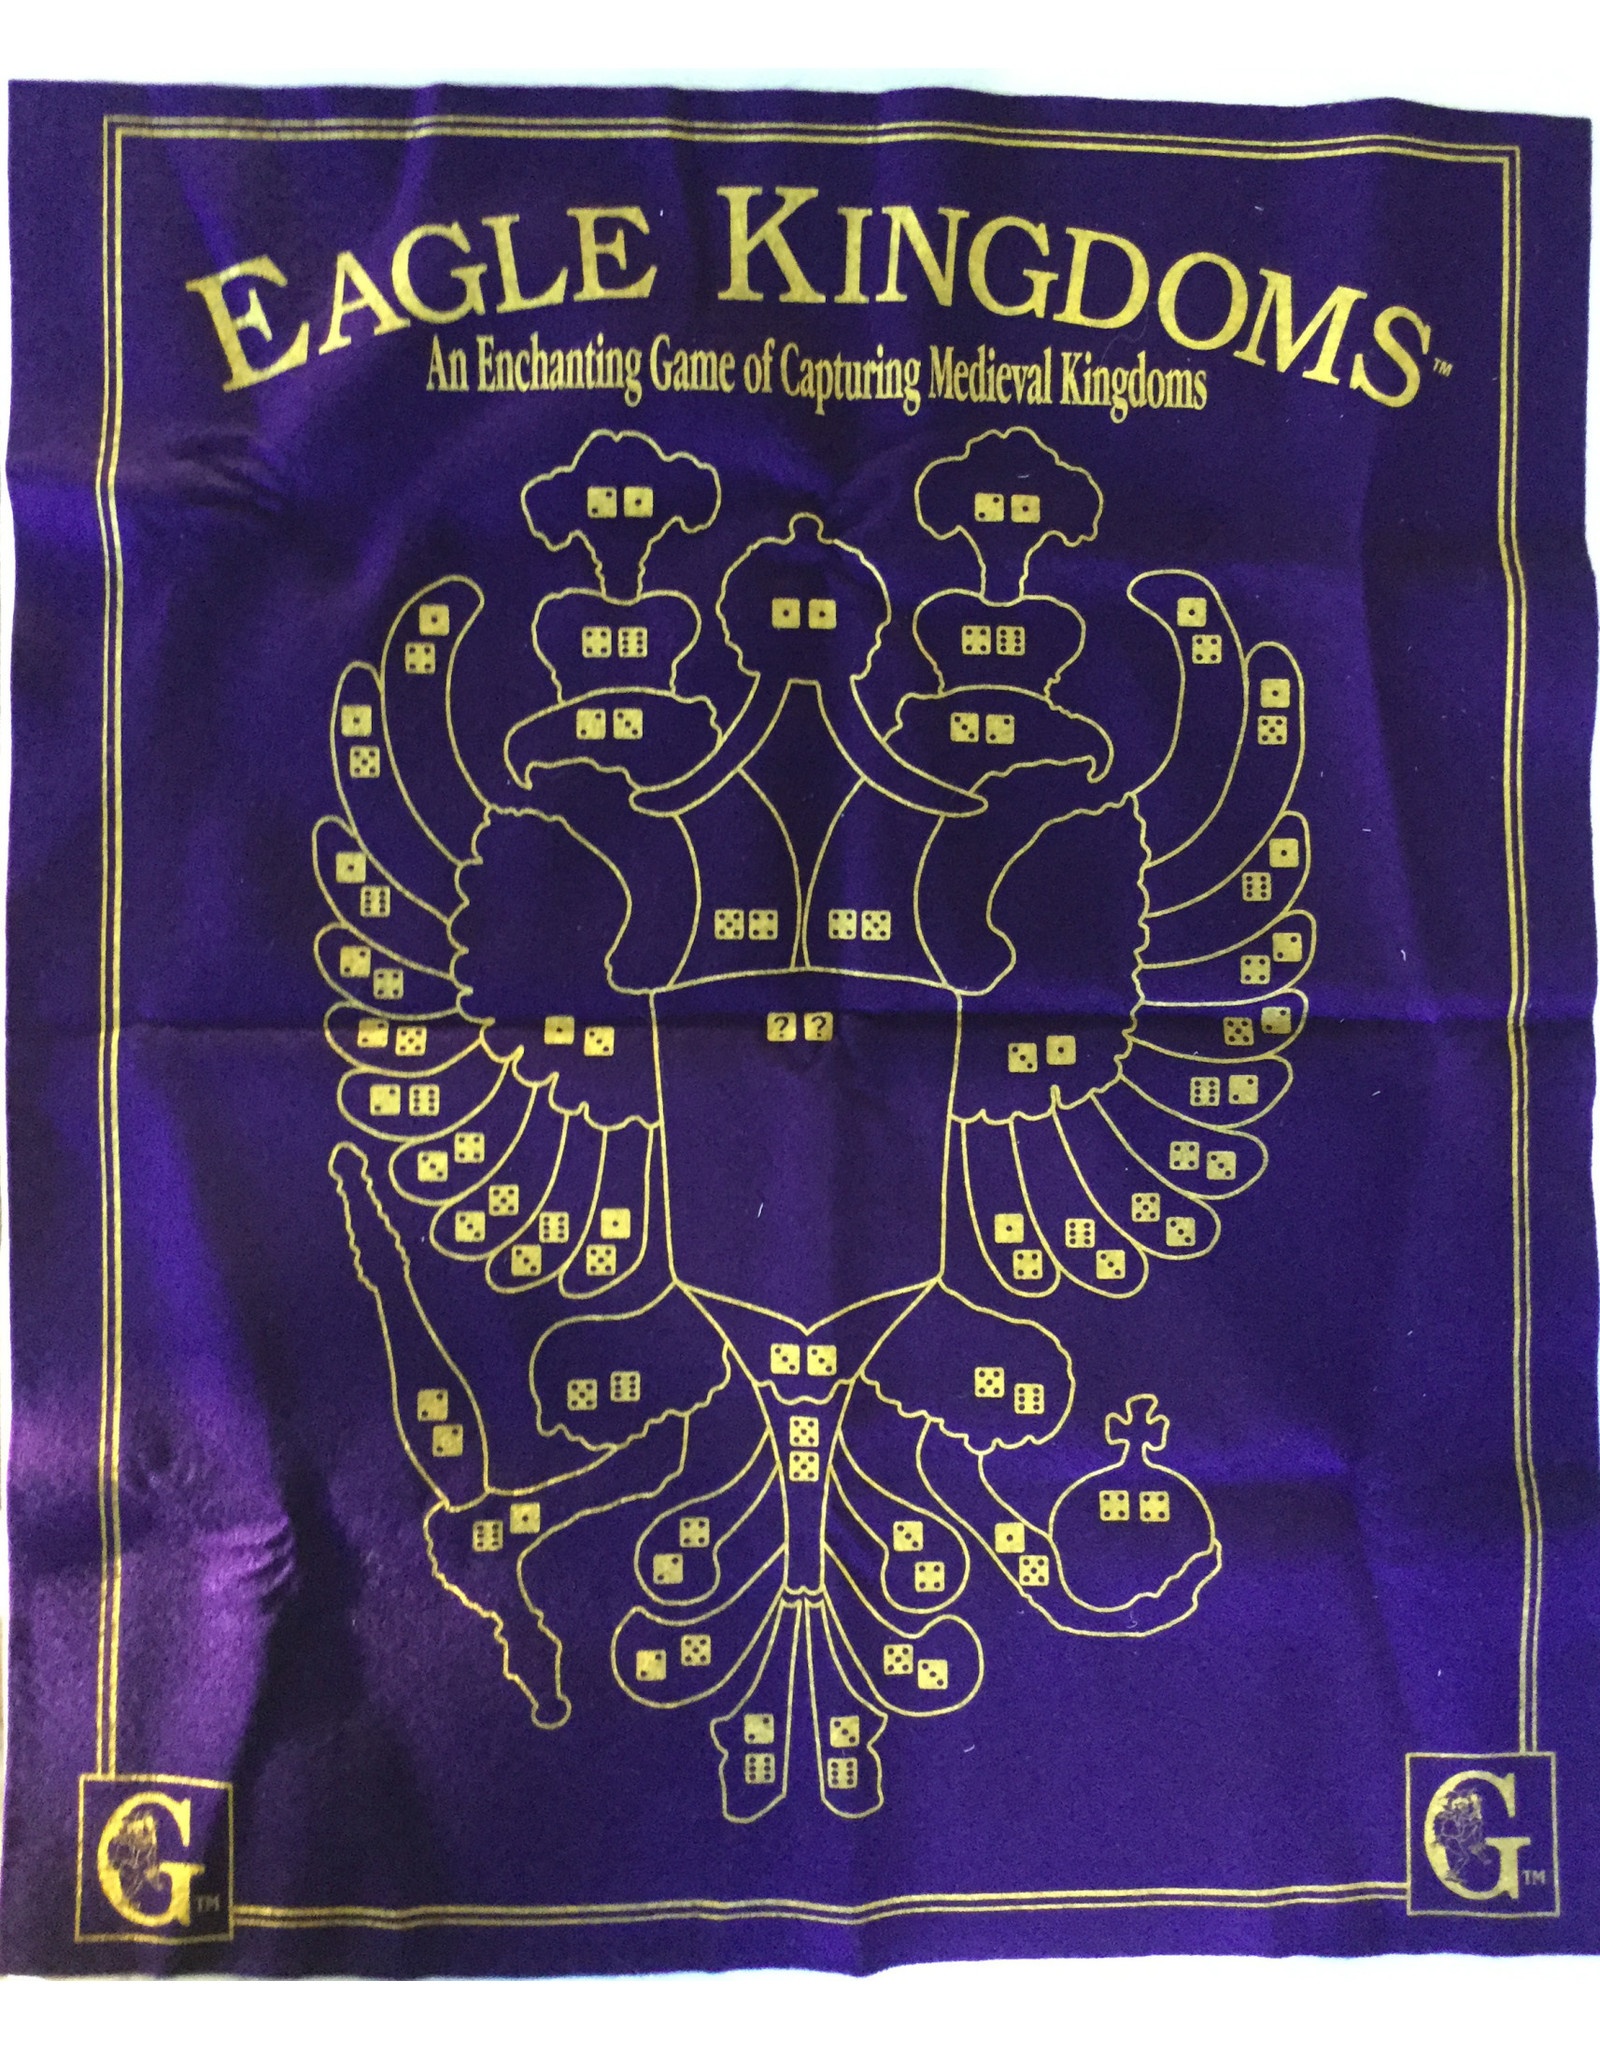 Gamewright Eagle Kingdoms (1994)